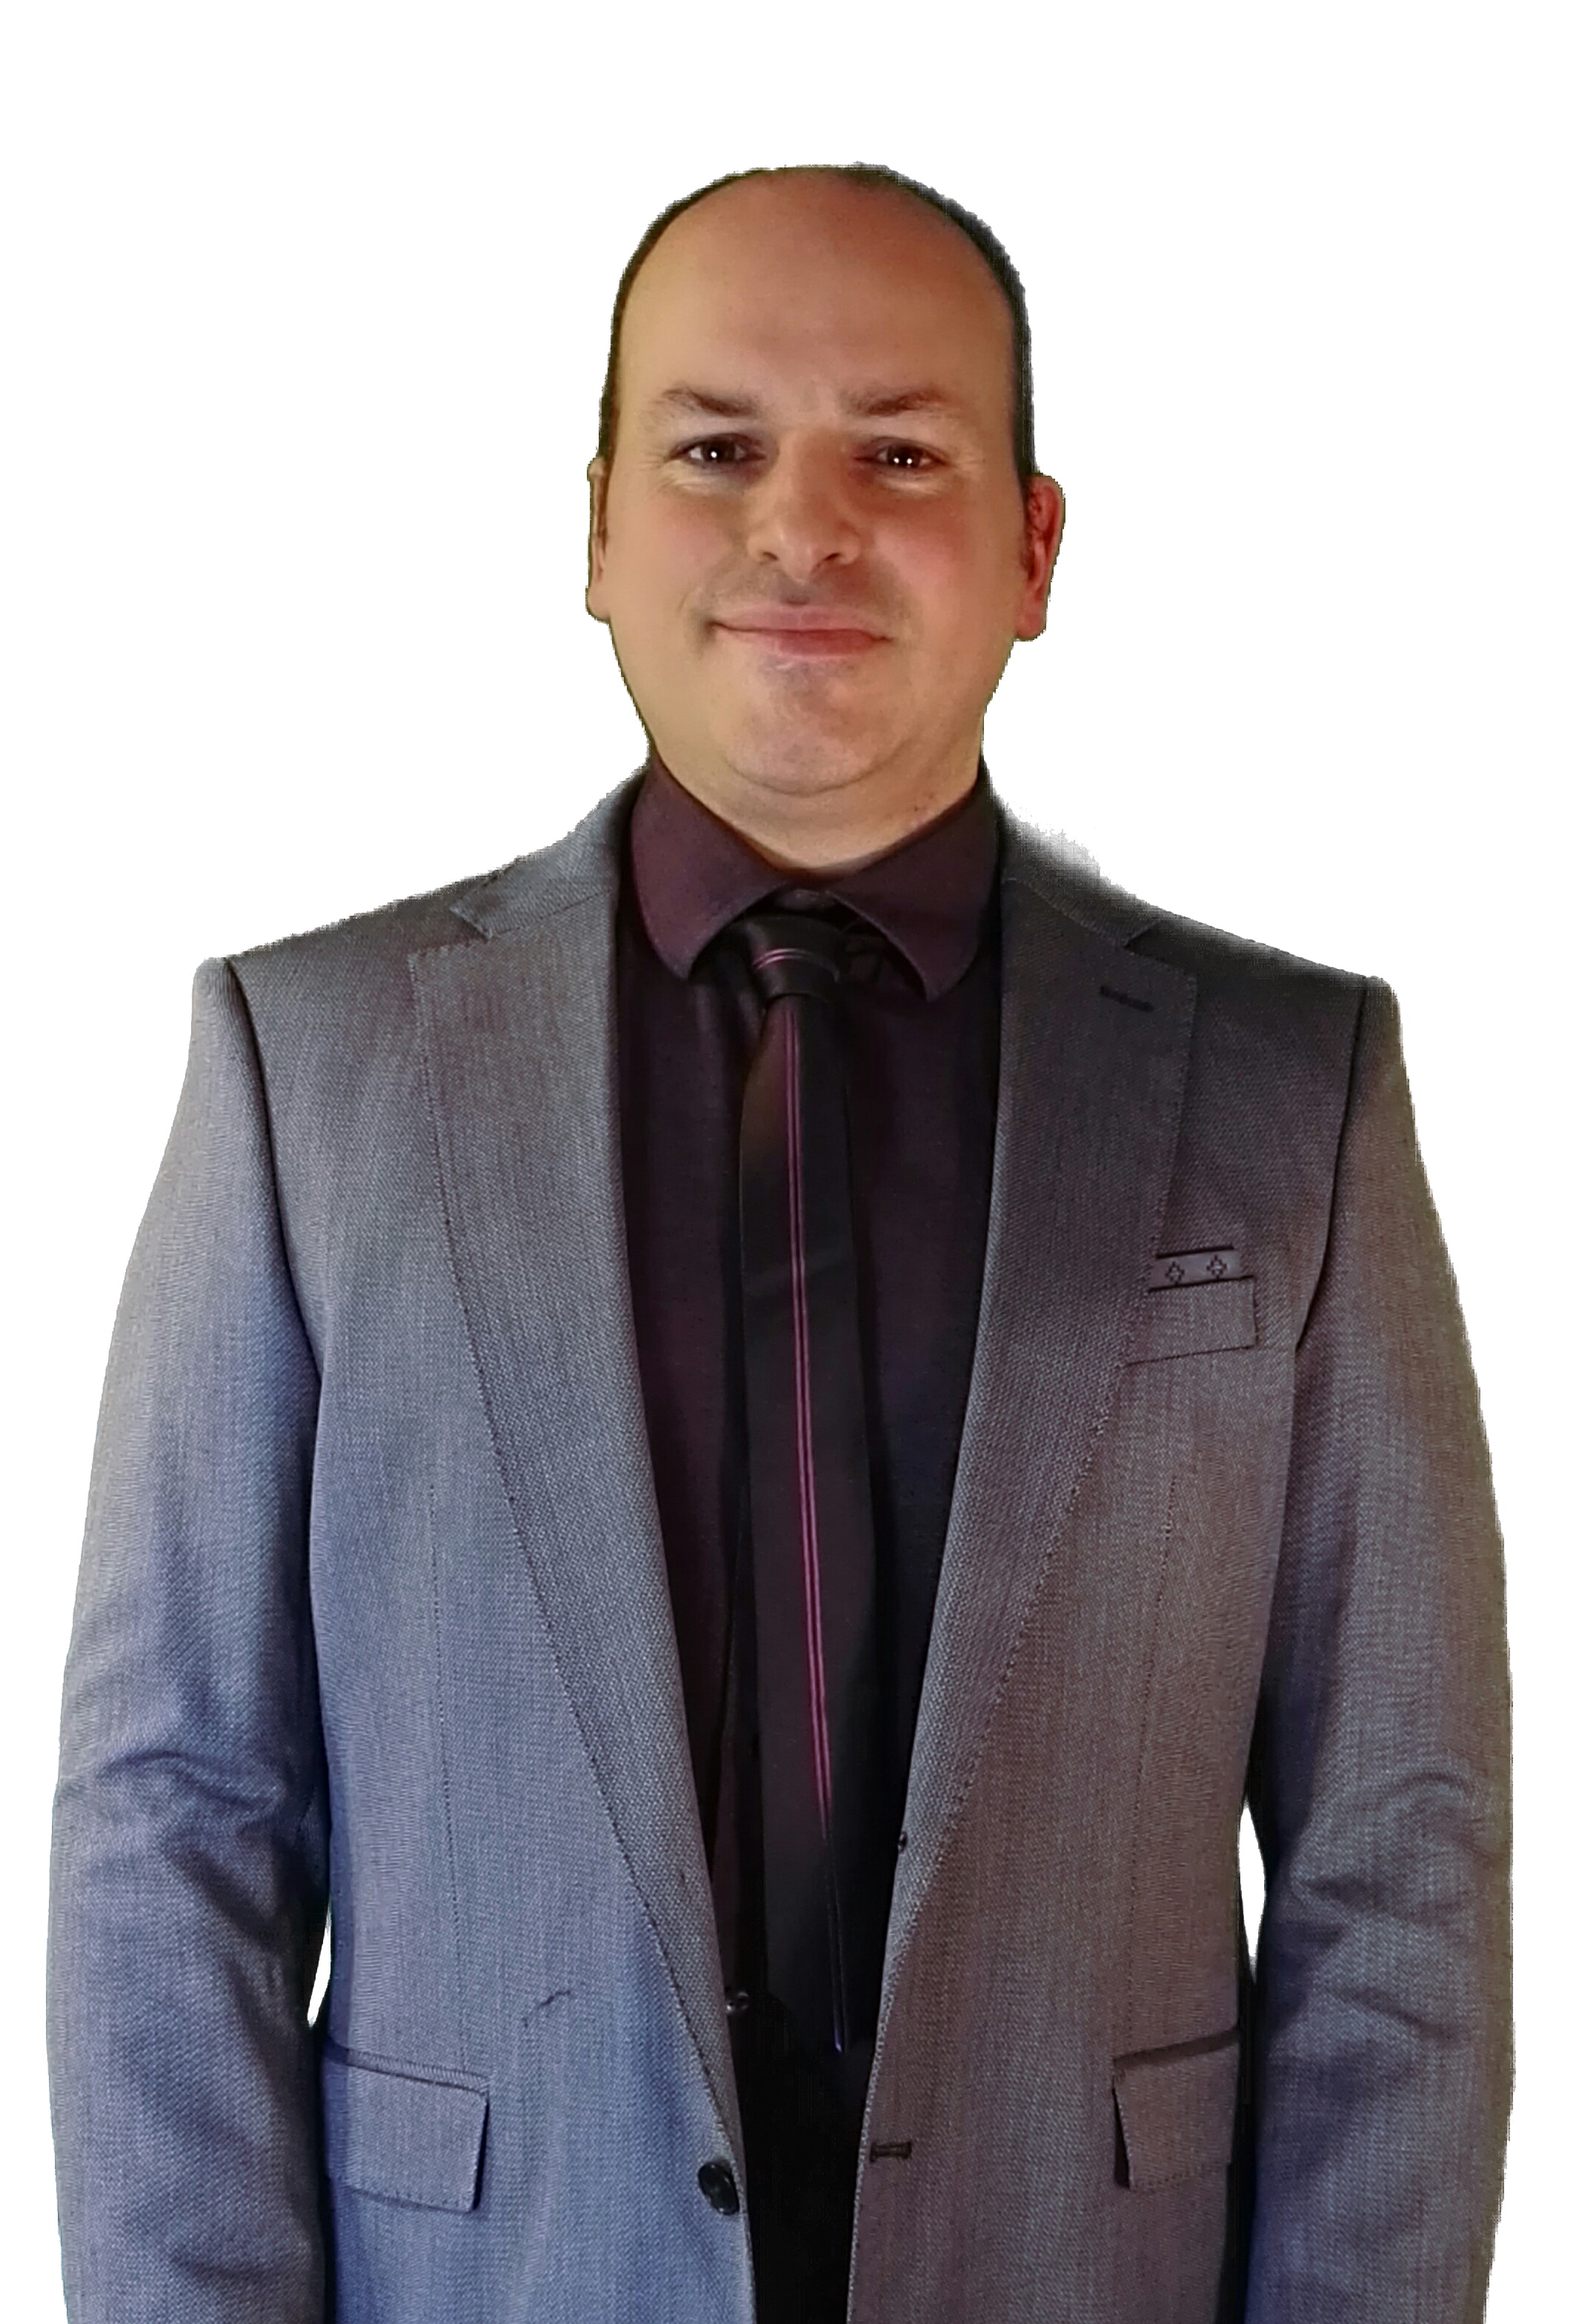 Profile Picture of Dario, no background, transparent 500 x 900 pixels high res